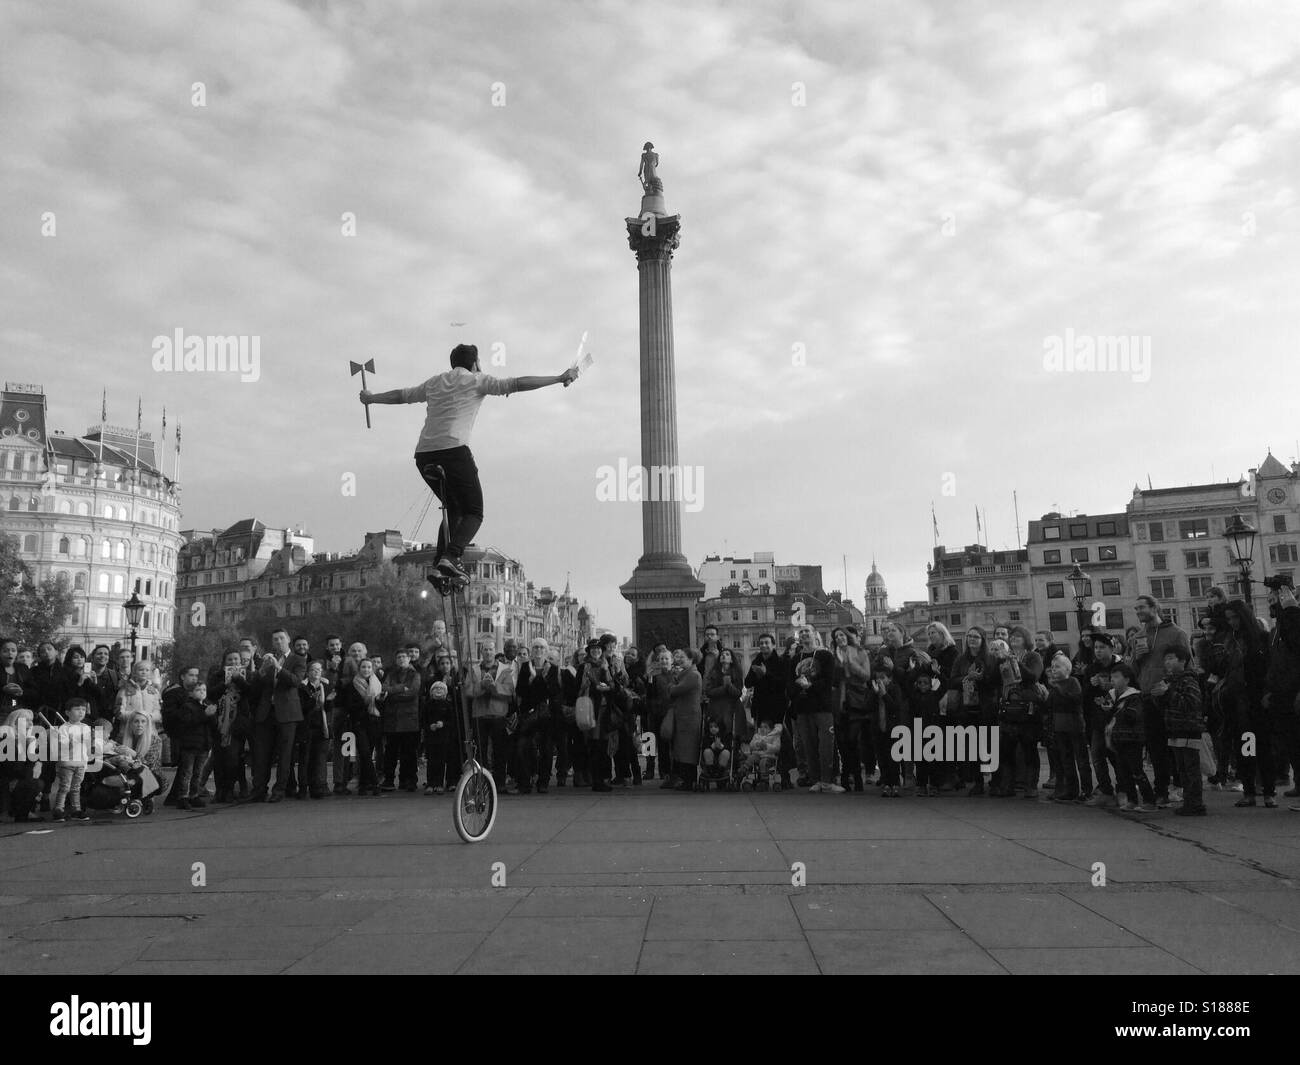 Performer in front of nelson's column Trafalgar Square London Stock Photo